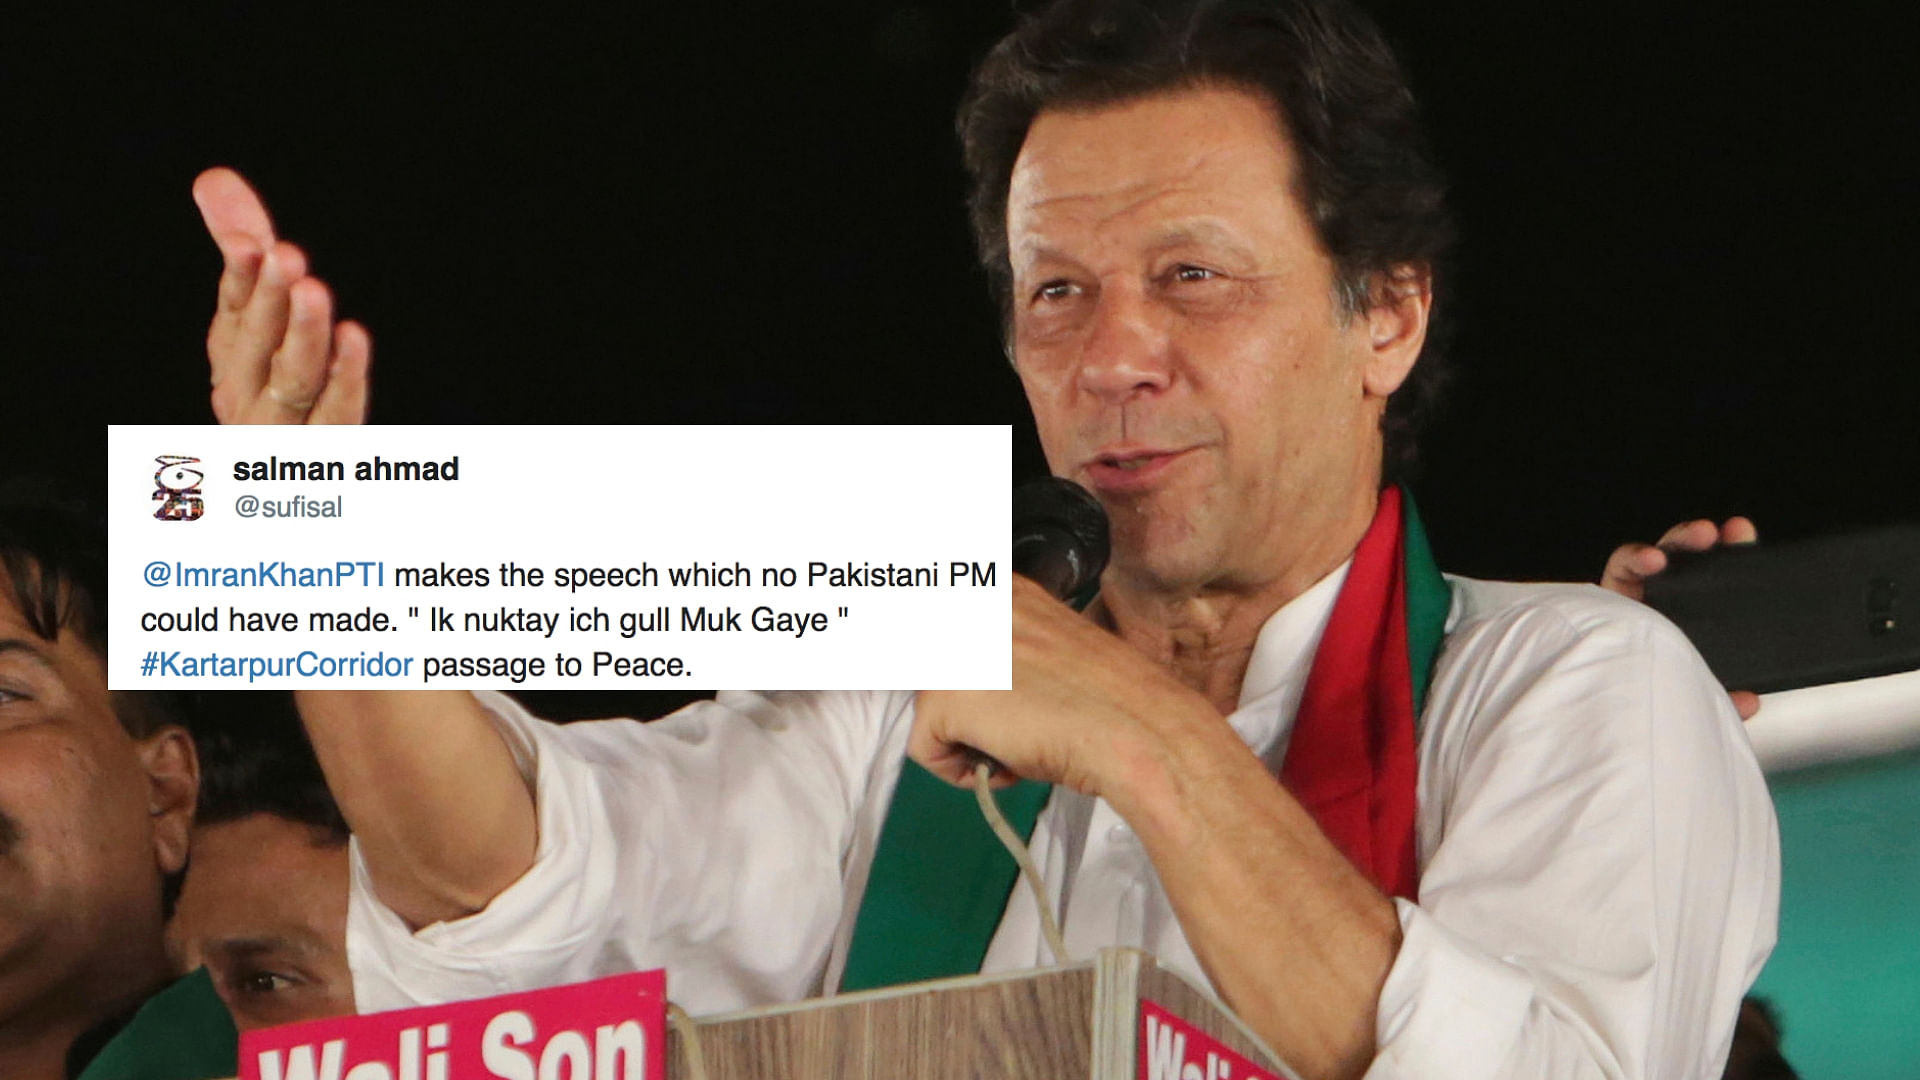 Pak PM Imran Khan said that if India takes one step towards peace, Pakistan will take two.